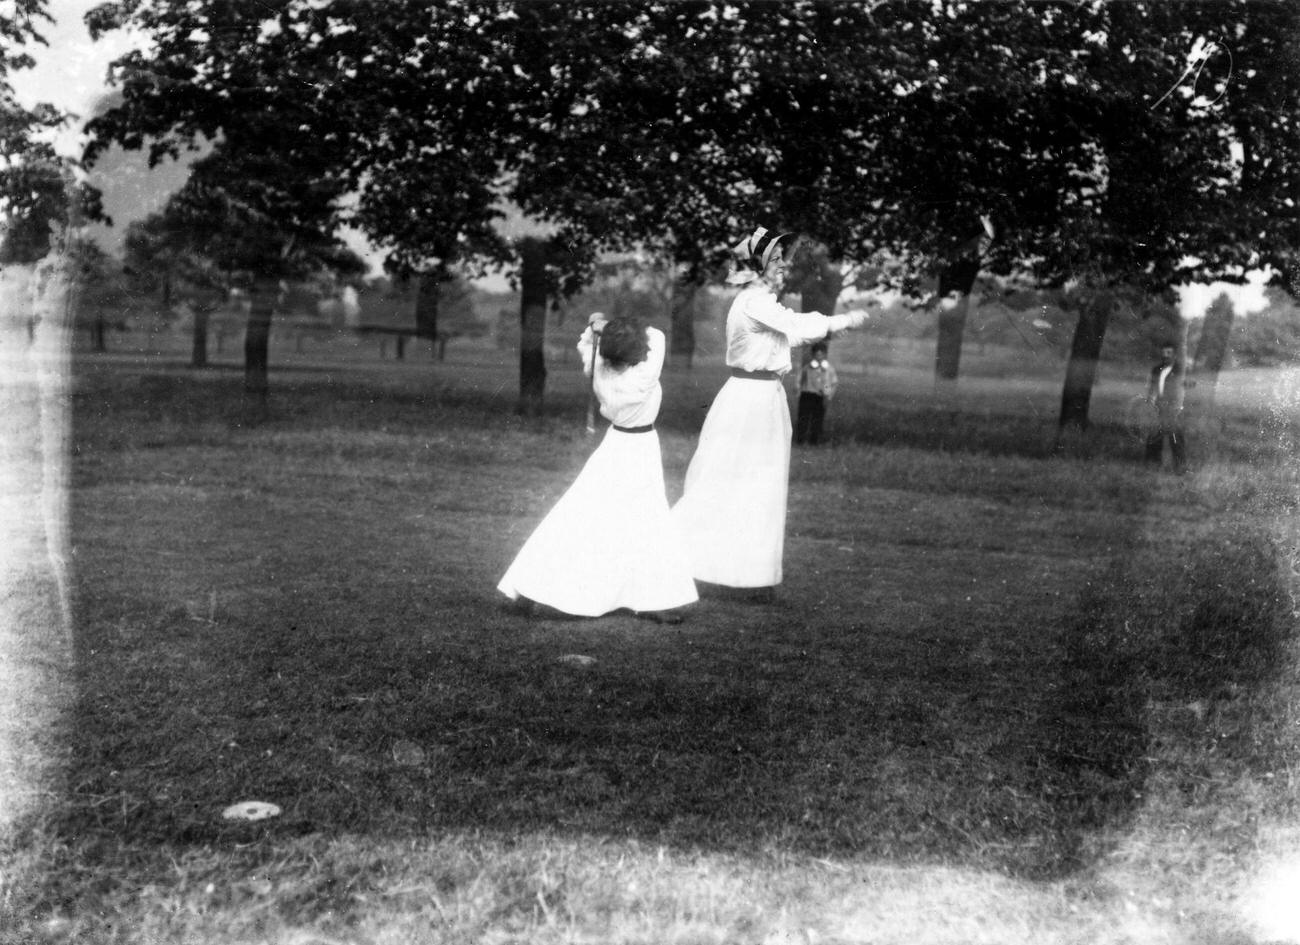 Ladies golfing at Bulwell Hall Park, Nottingham, 1910.